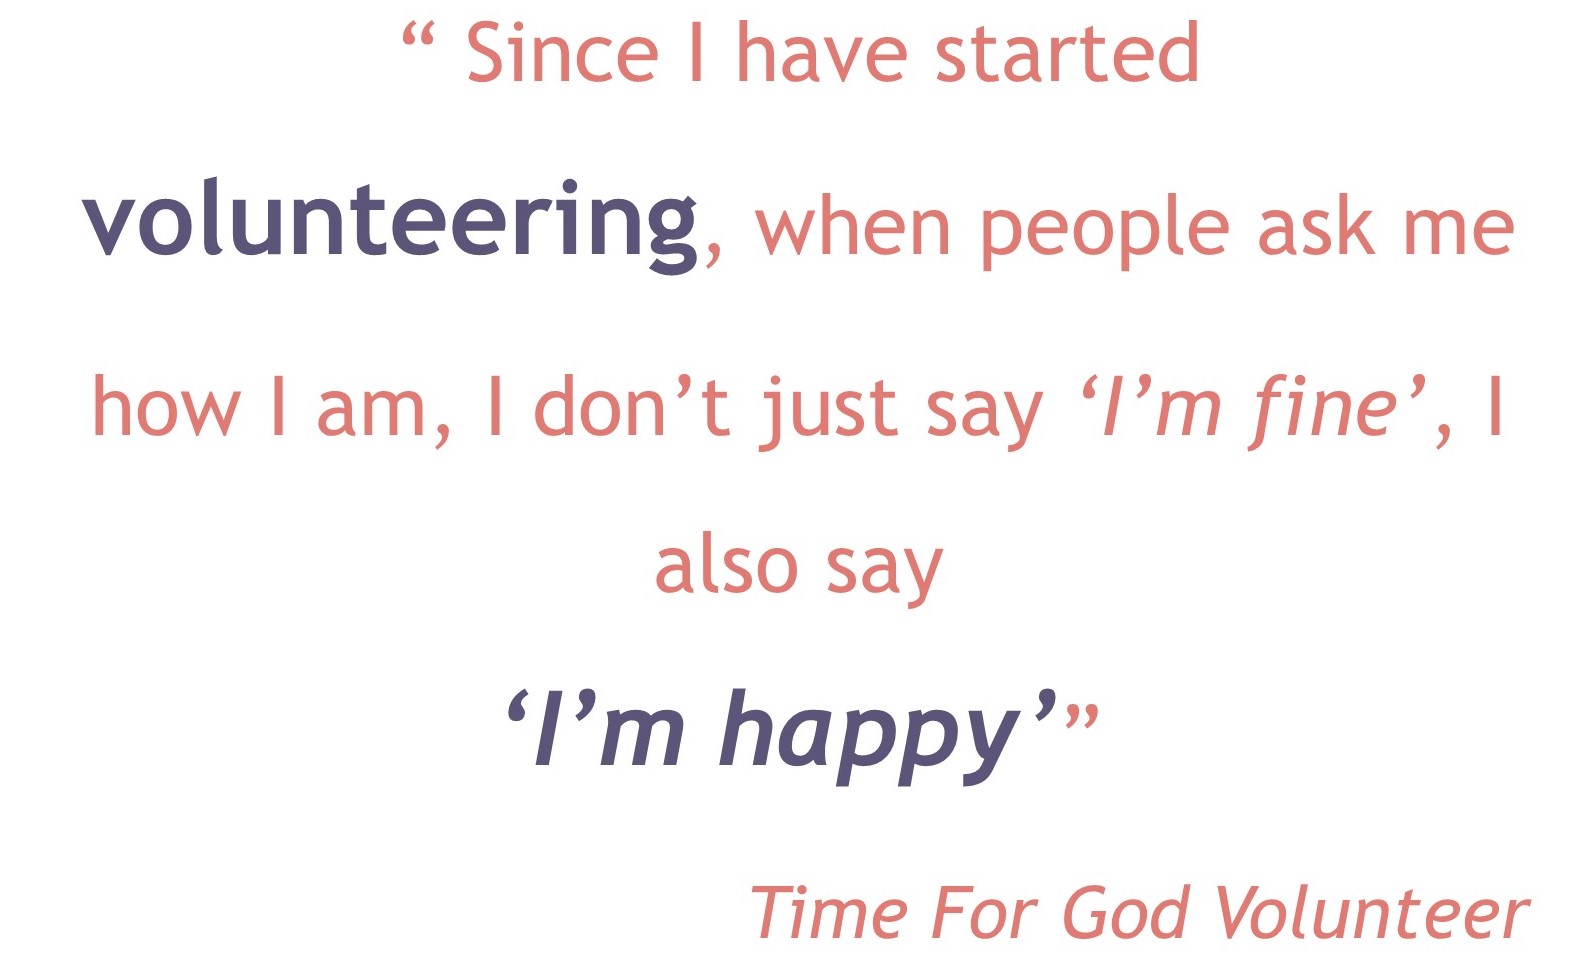 "Since I have started volunteering, when people ask me how I am, I don't just say 'I'm fine', I also say 'I'm happy'" - Time for God Volunteer